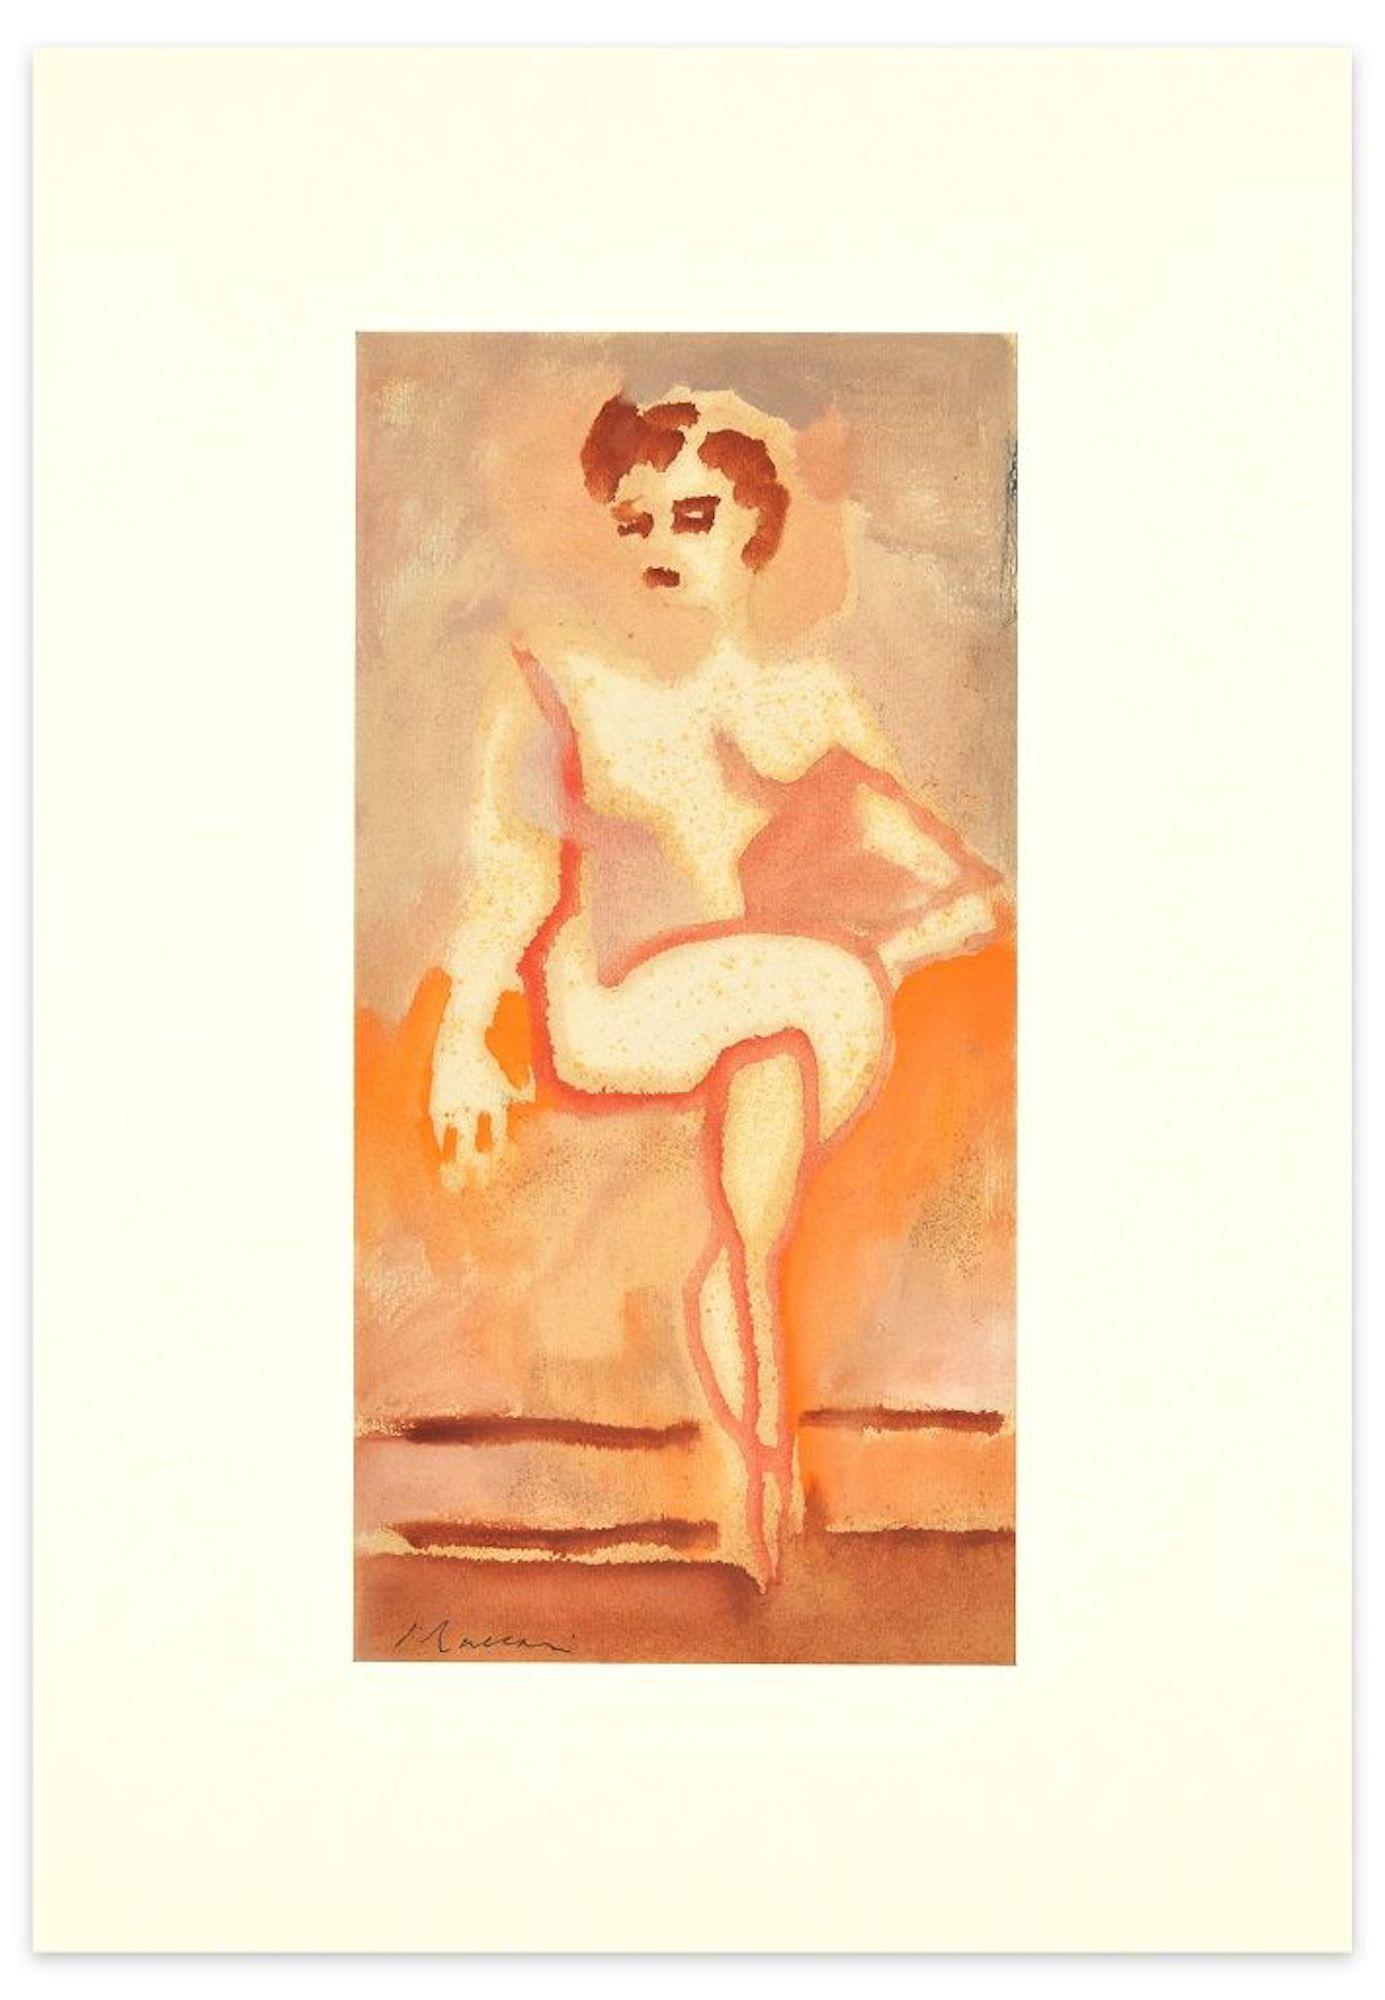 Sitting Sensual Woman - Mixed Media by M. Maccari - 1957 - Mixed Media Art by  Mino Maccari